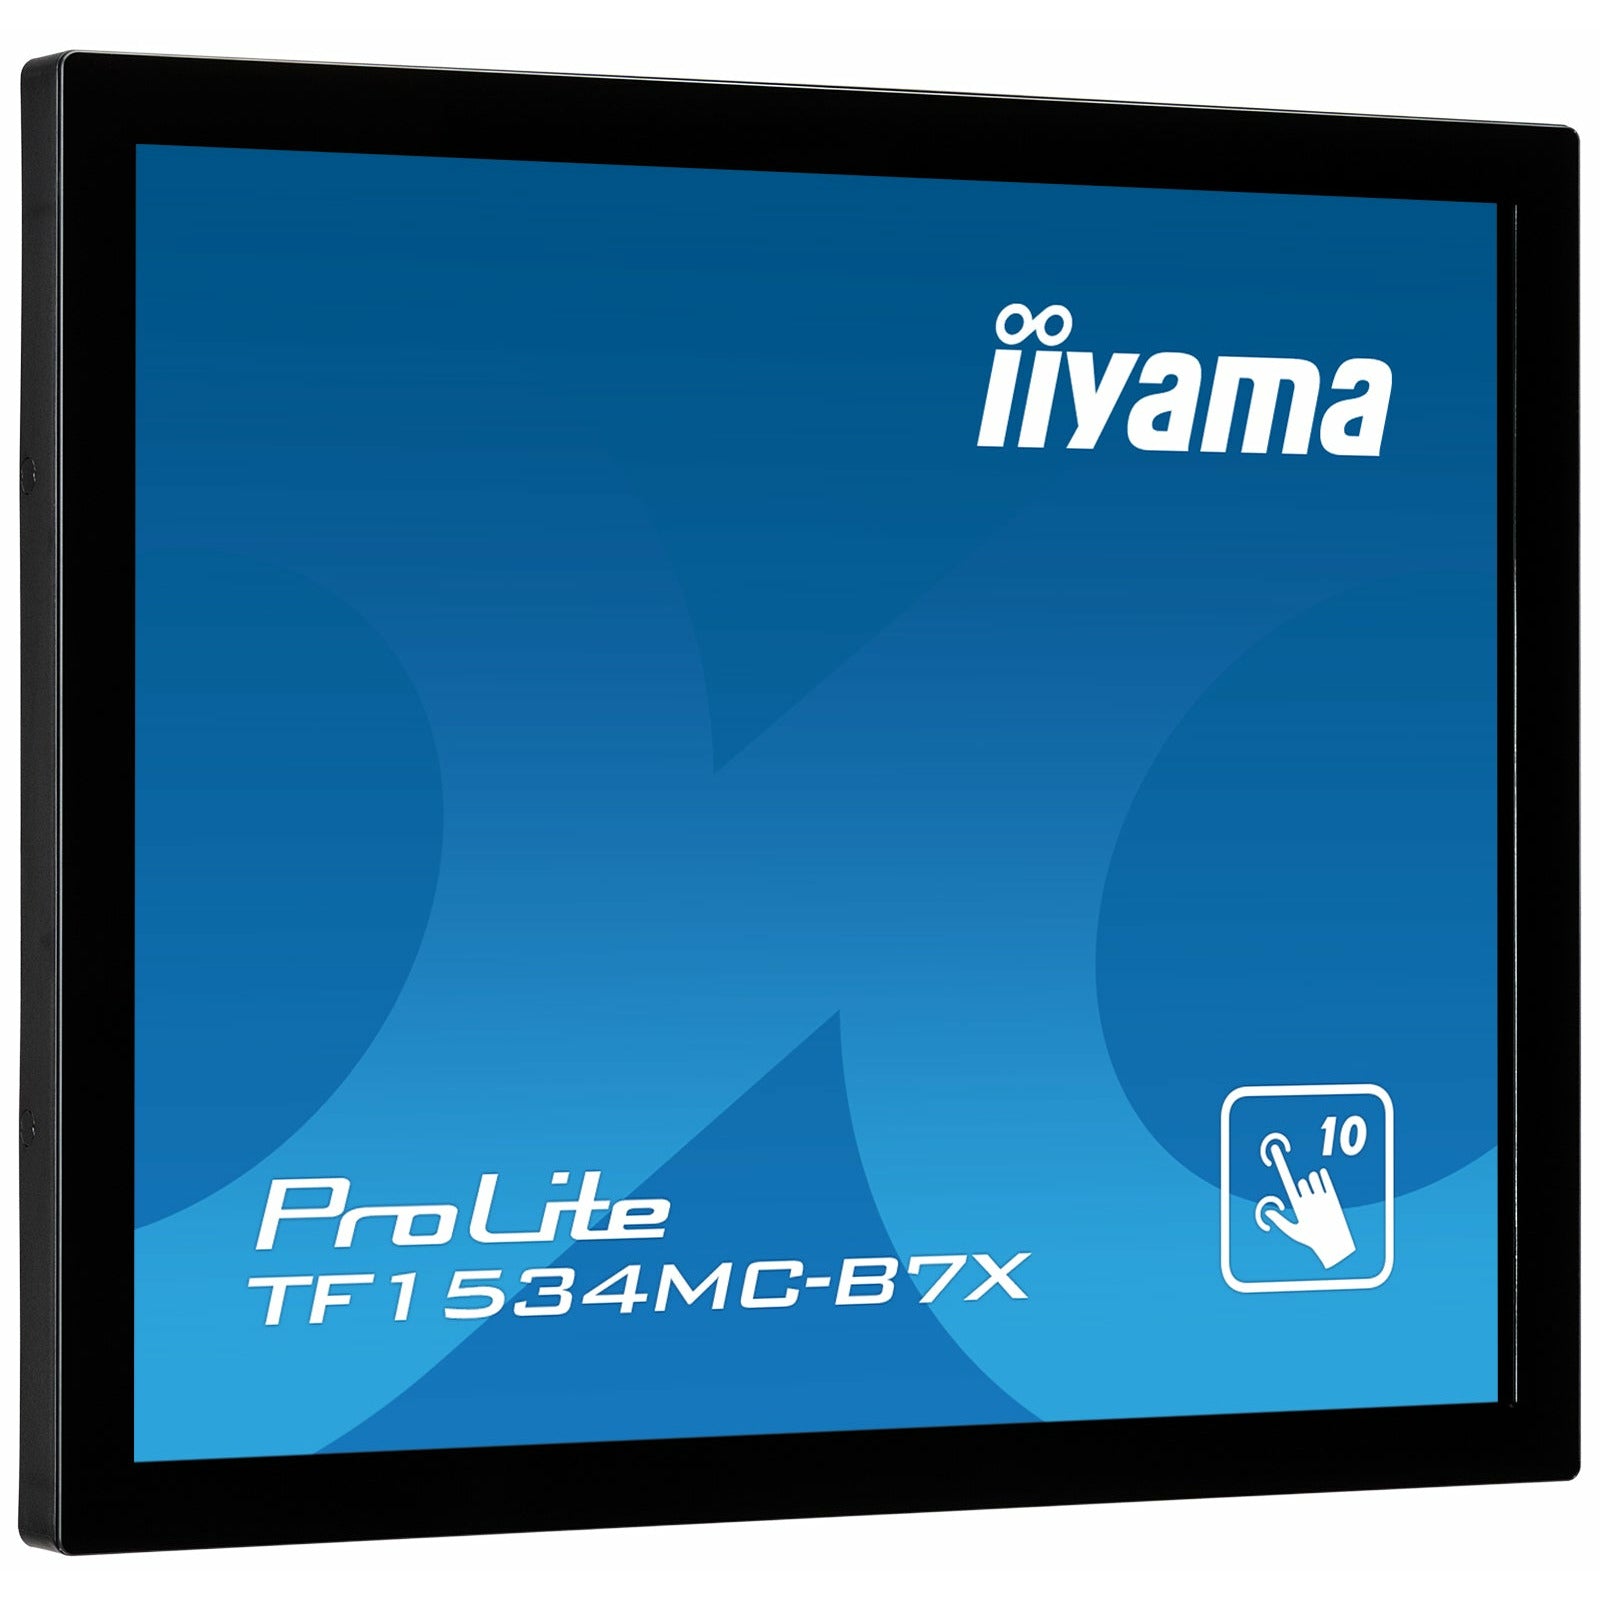 iiyama ProLite TF1534MC-B7X 15" Capacitive Touch Screen Display - image 3 of 9